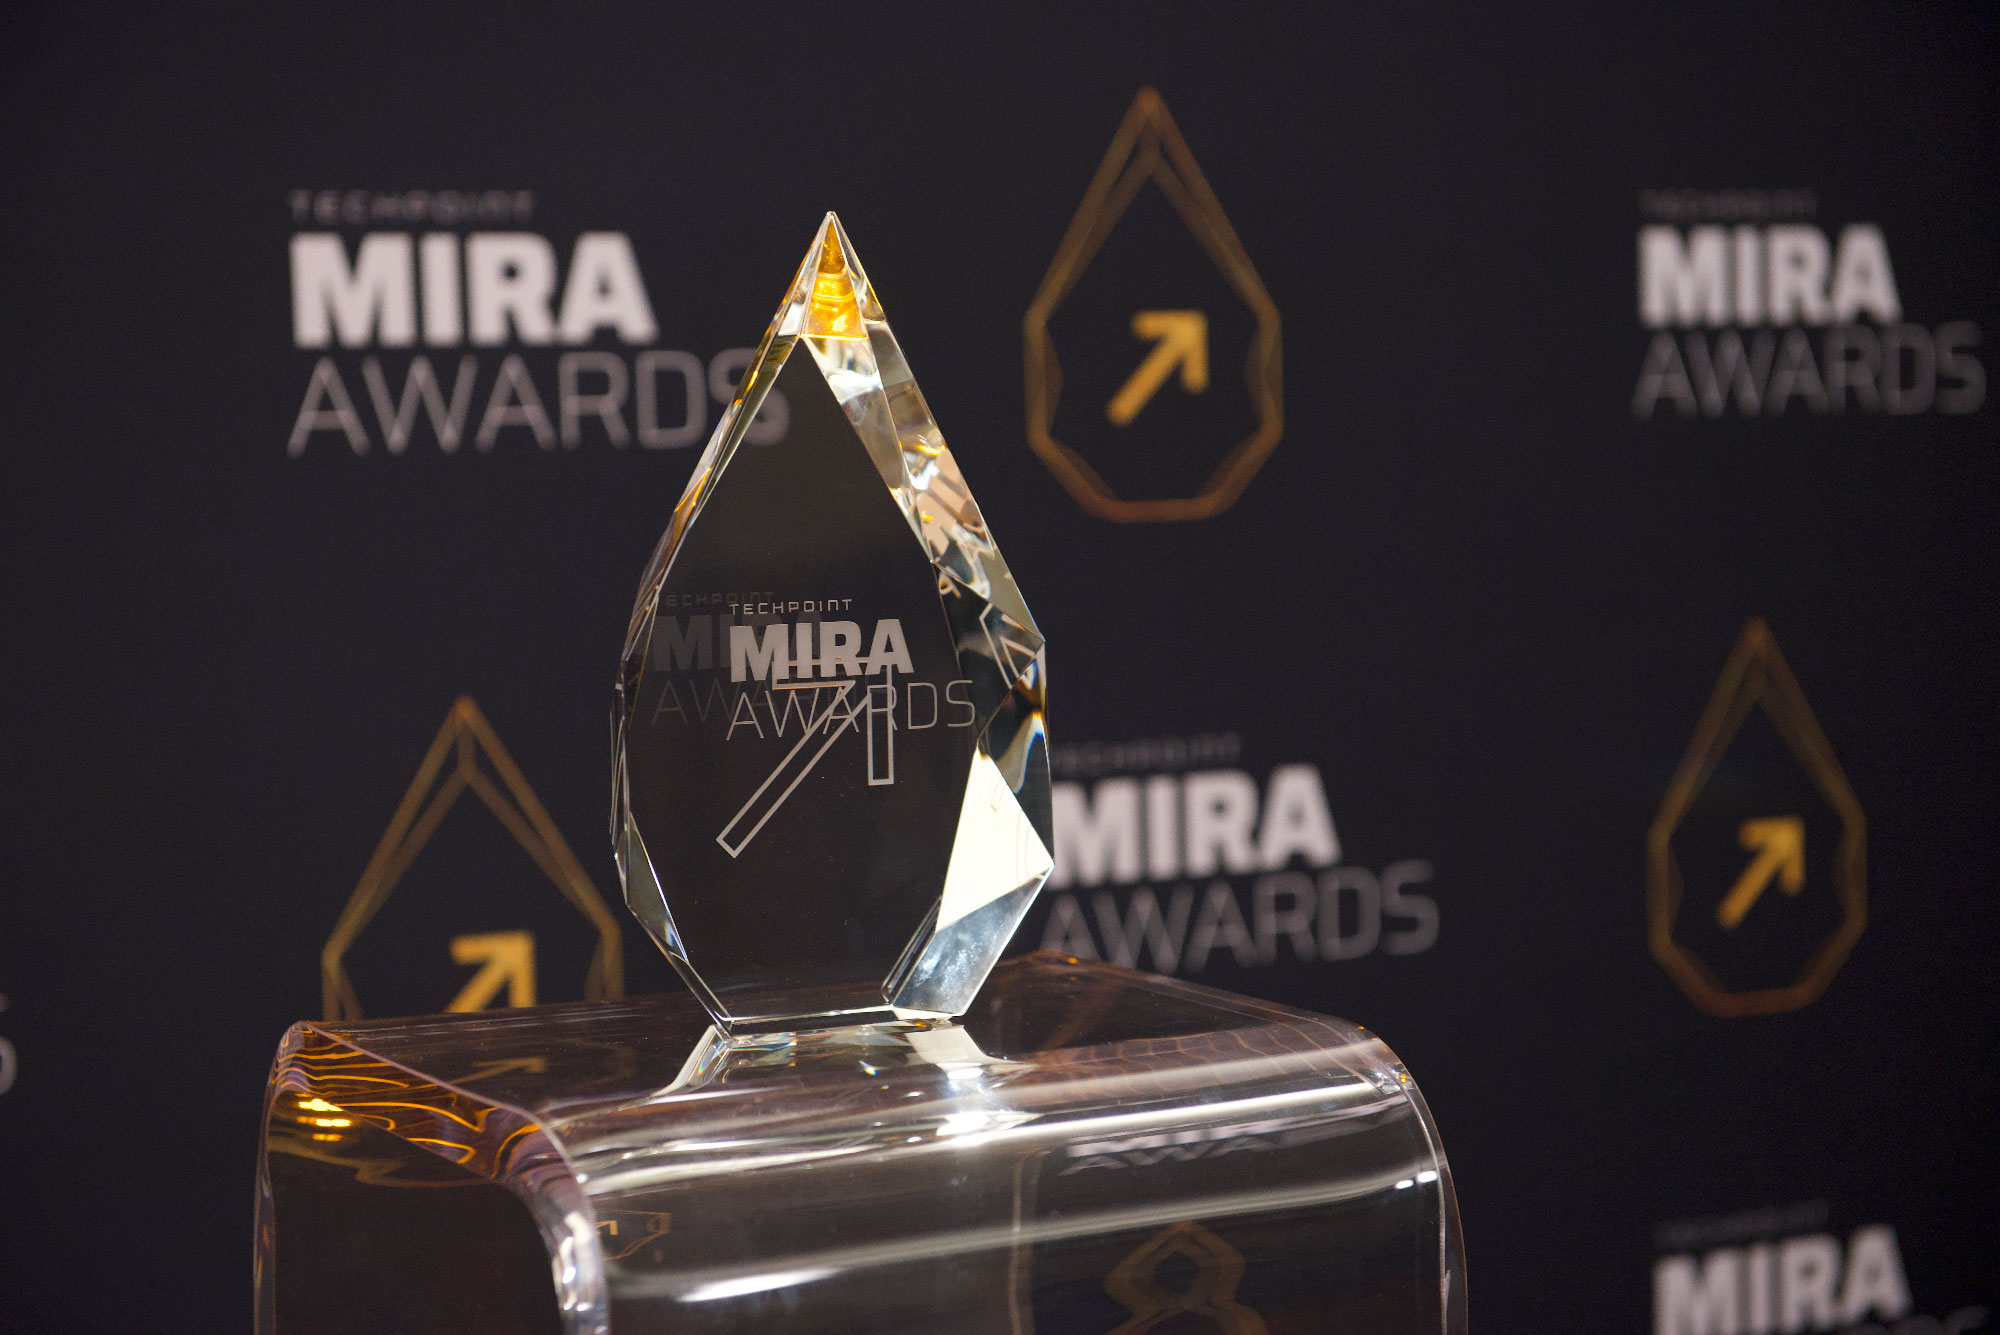 SIMBA Chain Wins New Tech Product of the Year Mira Award SIMBA Chain